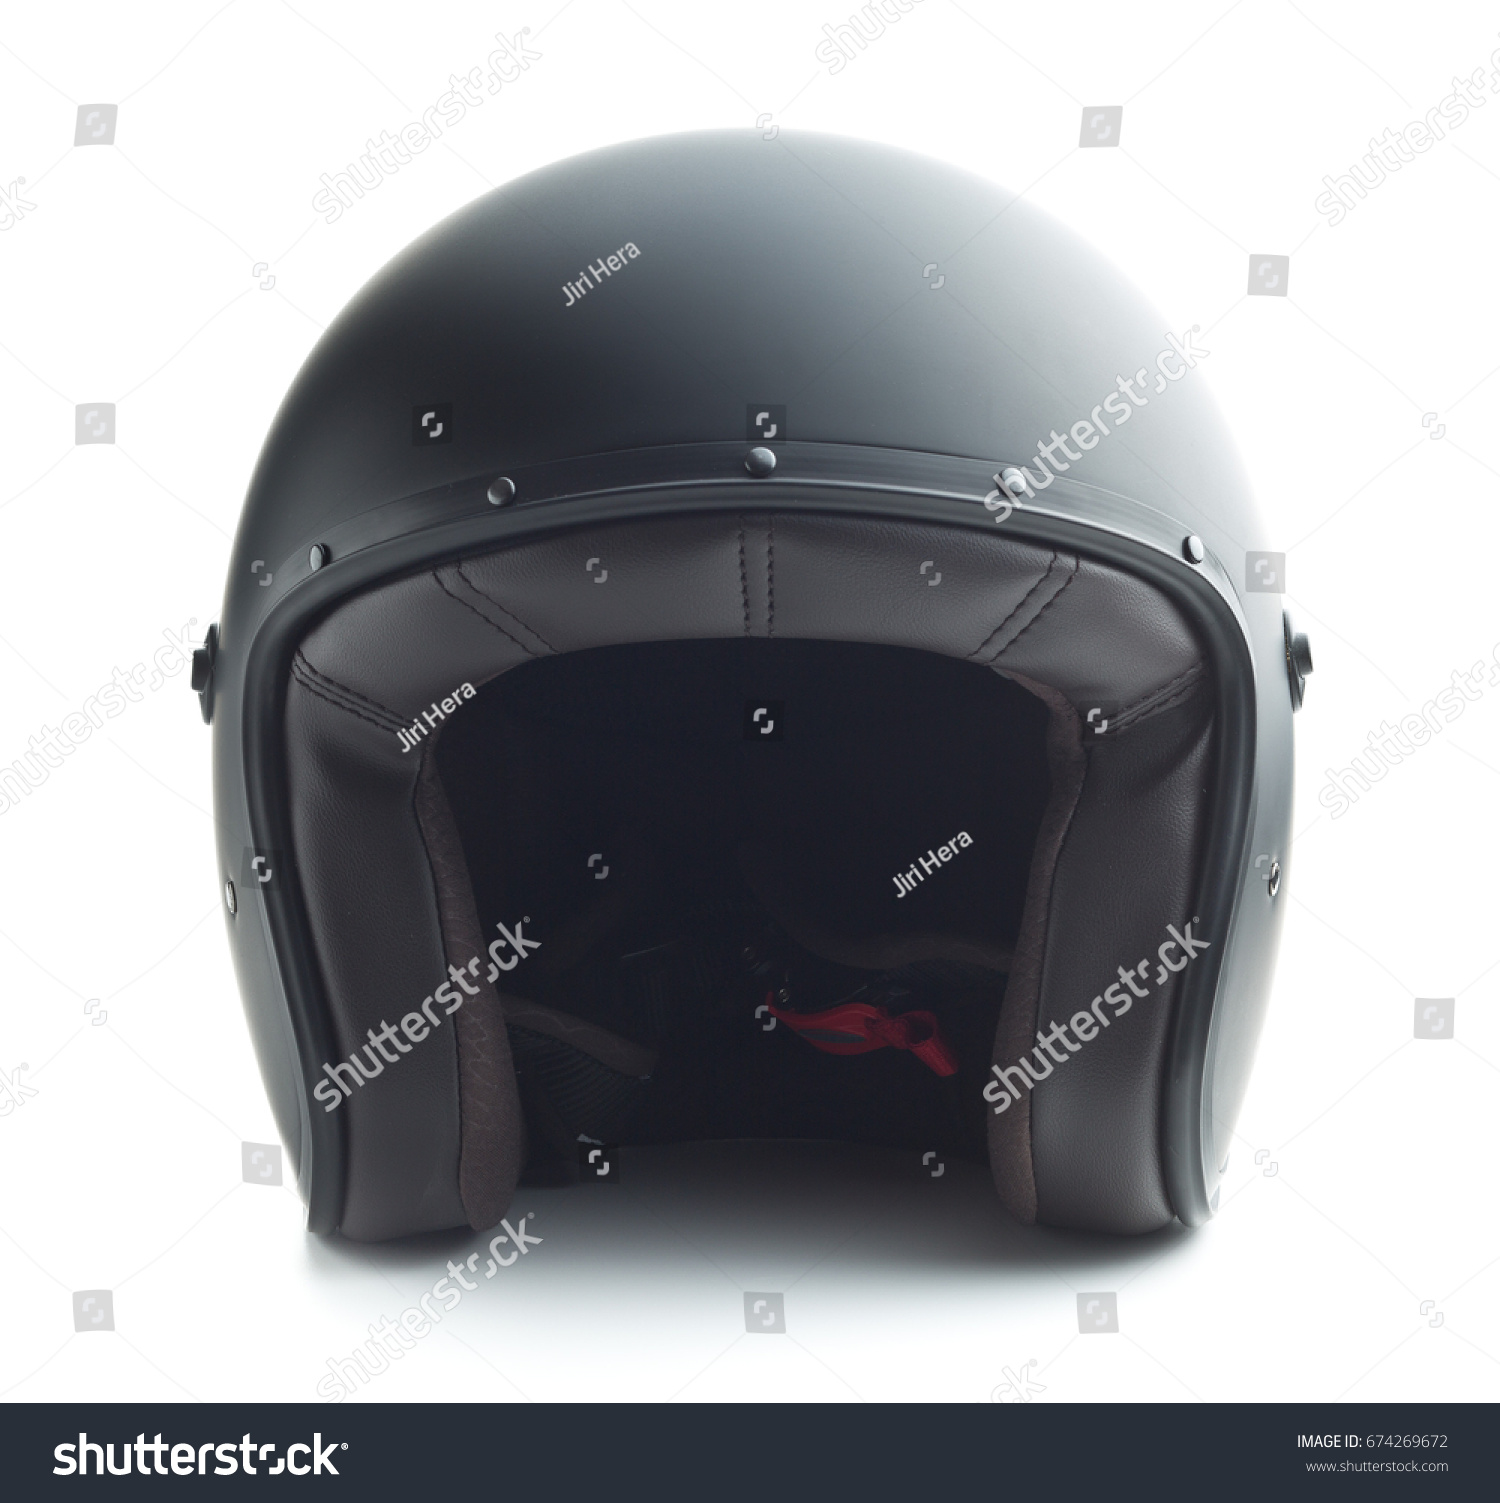 Black motorcycle helmet isolated on white background. #674269672